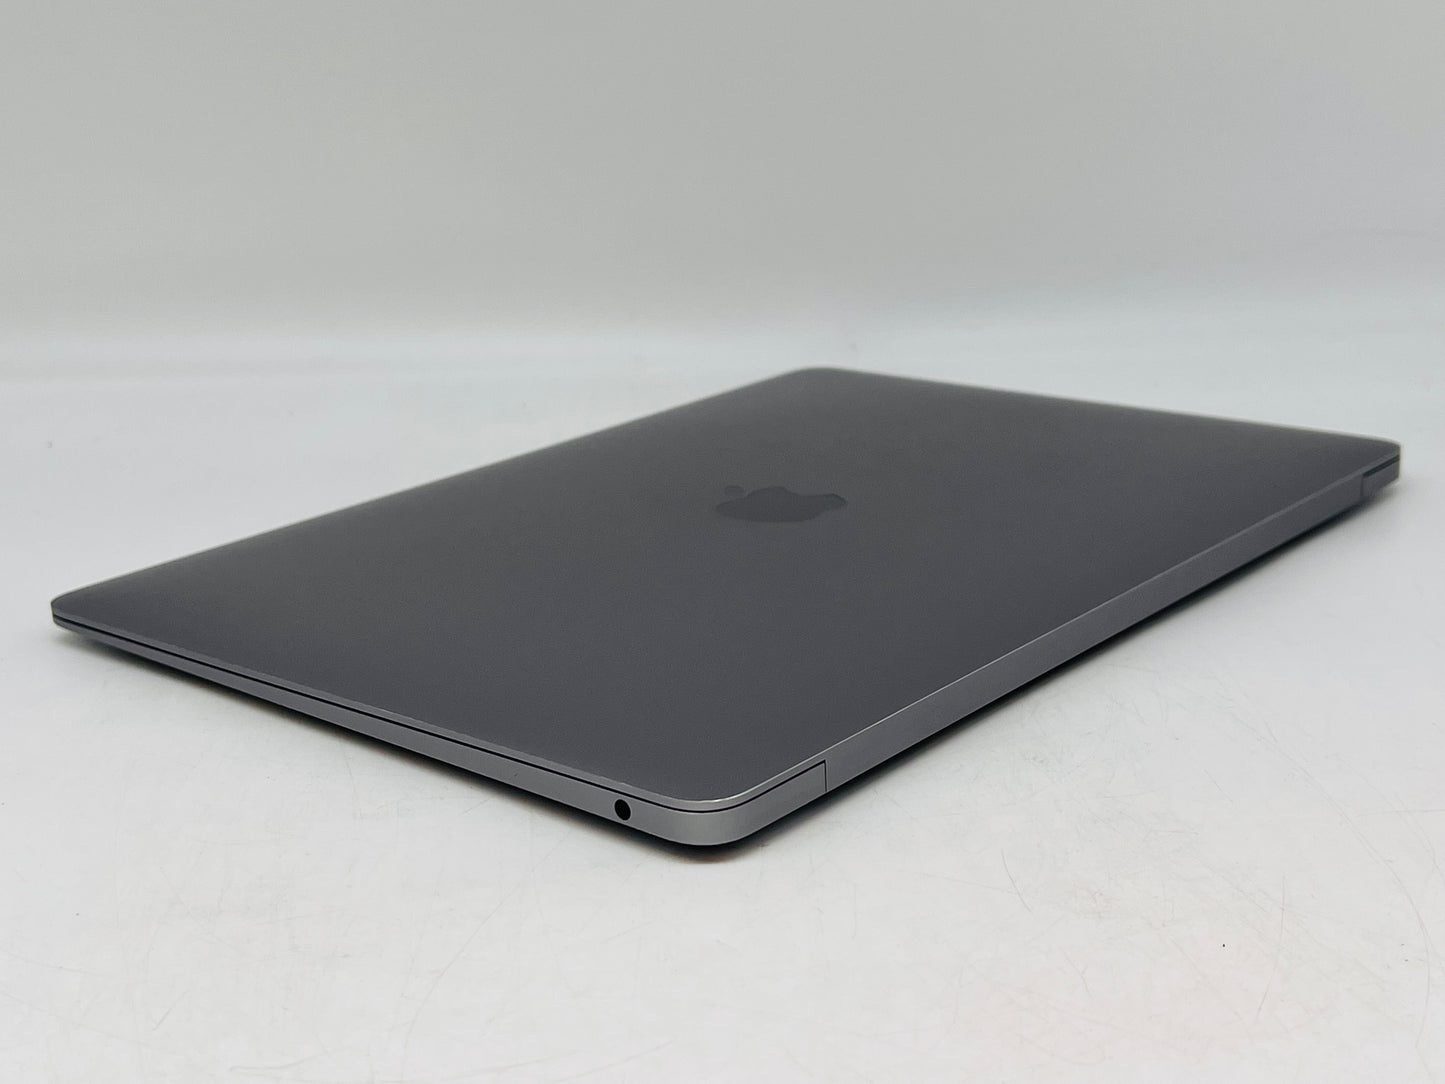 Apple 2019 13 in MacBook Air True Tone Display 1.6GHz i5 16GB RAM 128GB SSD